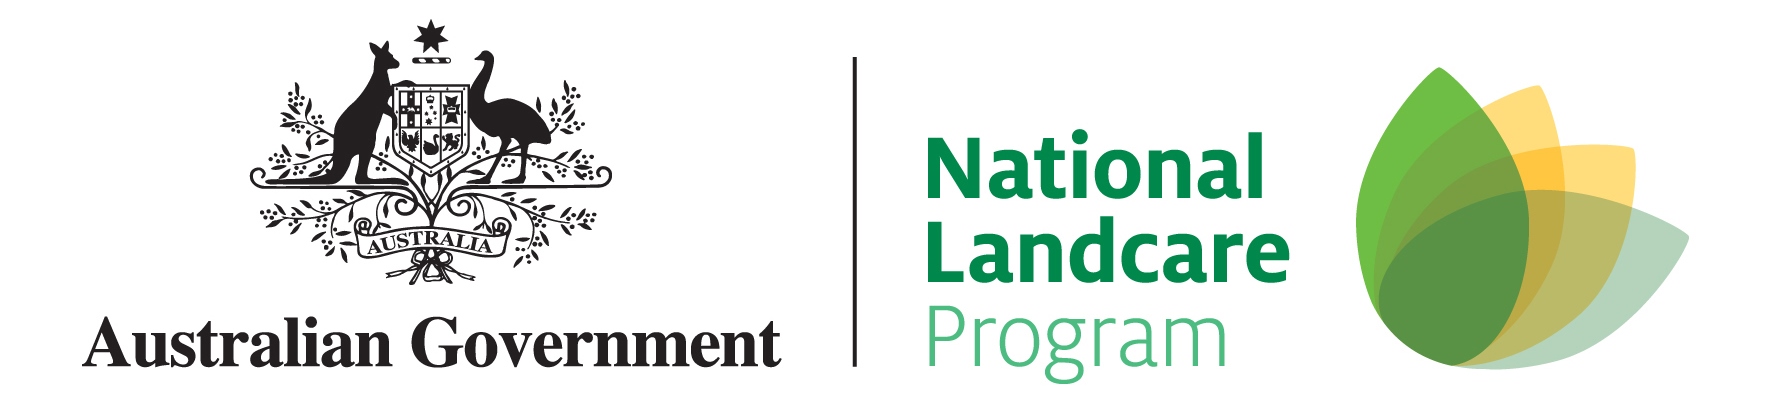 National Landcare Program logo